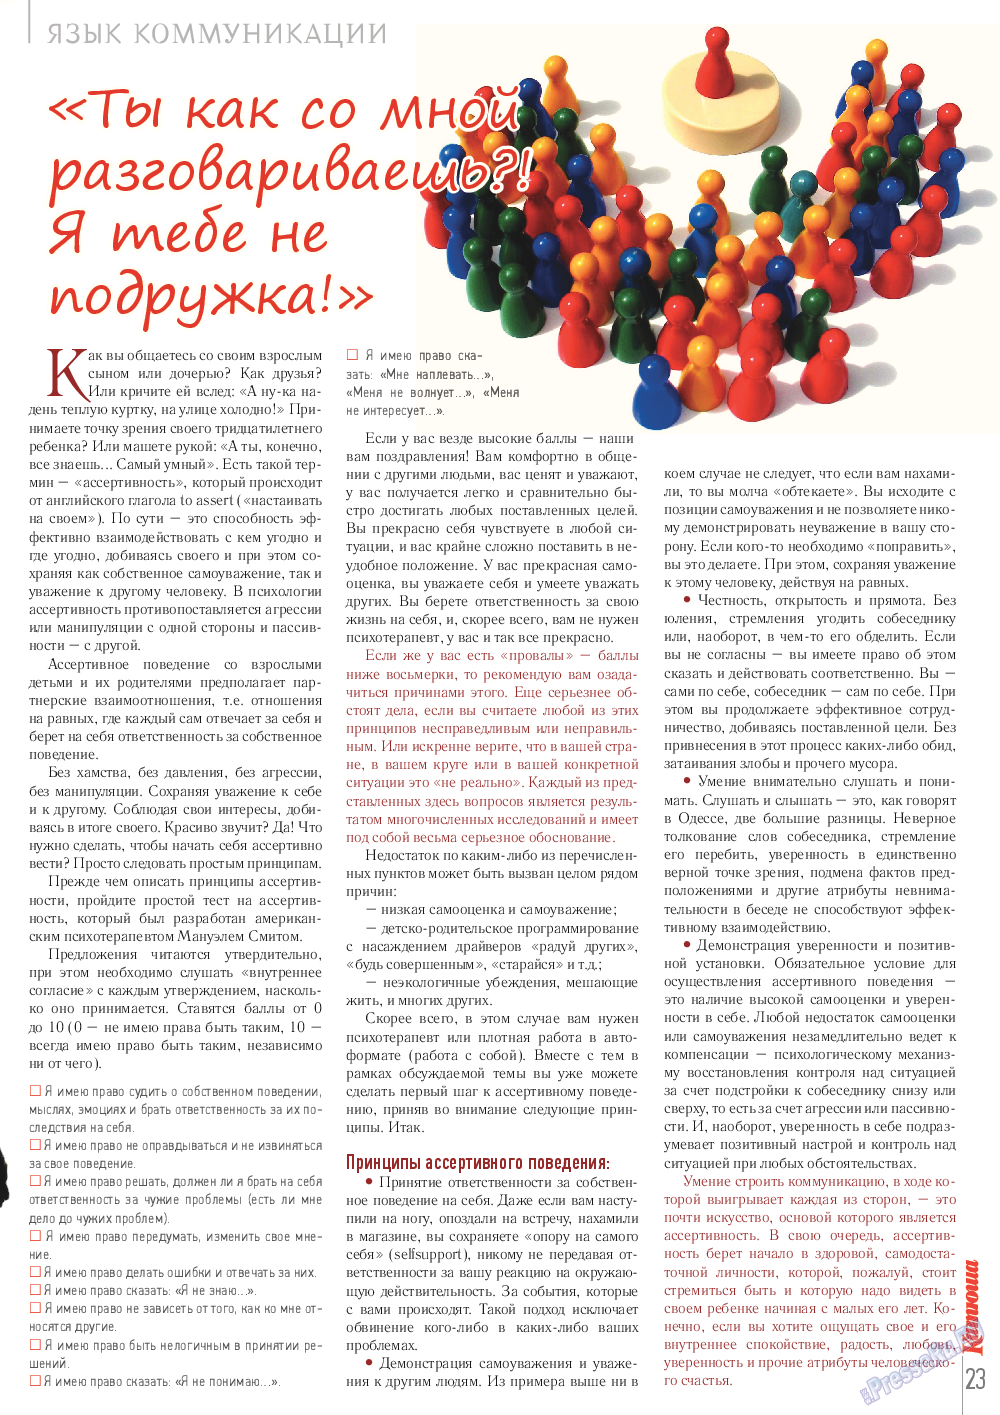 Катюша, журнал. 2013 №37 стр.23